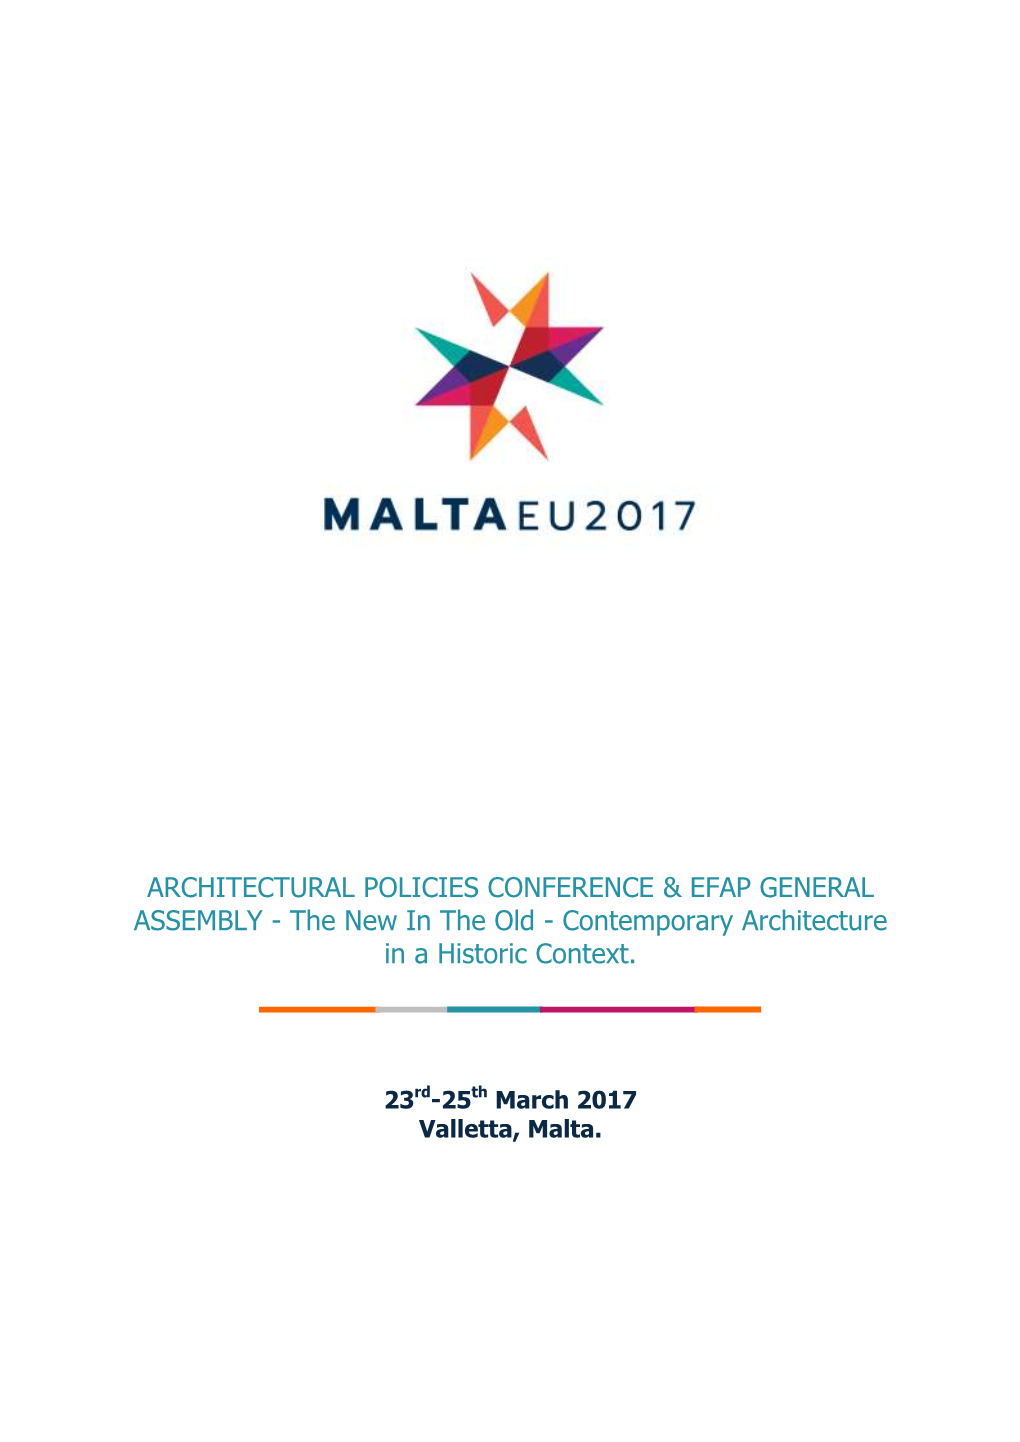 Architectural Policies Conference & Efap General